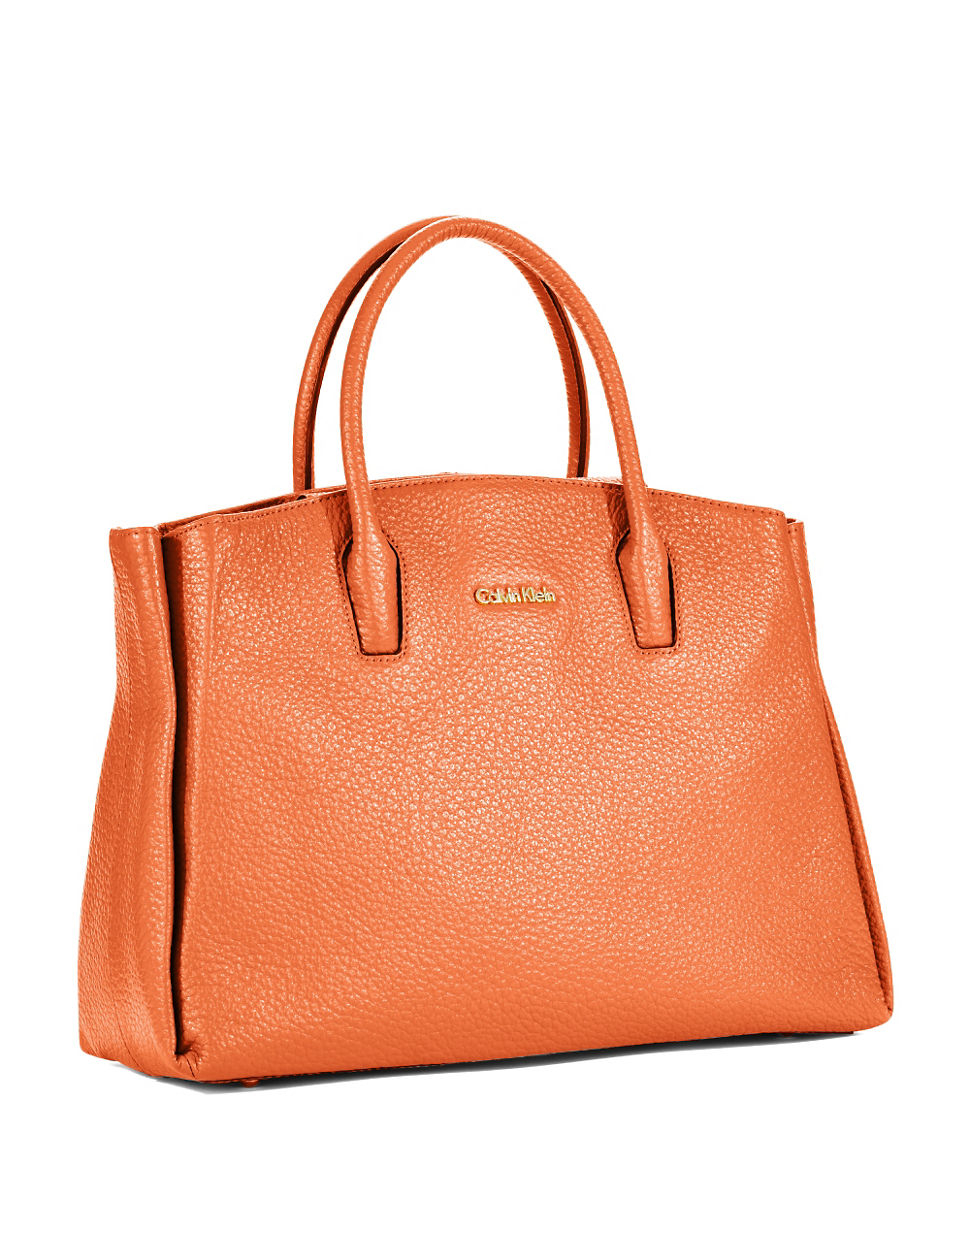 Calvin Klein Vachetta Leather Handbag in Orange | Lyst